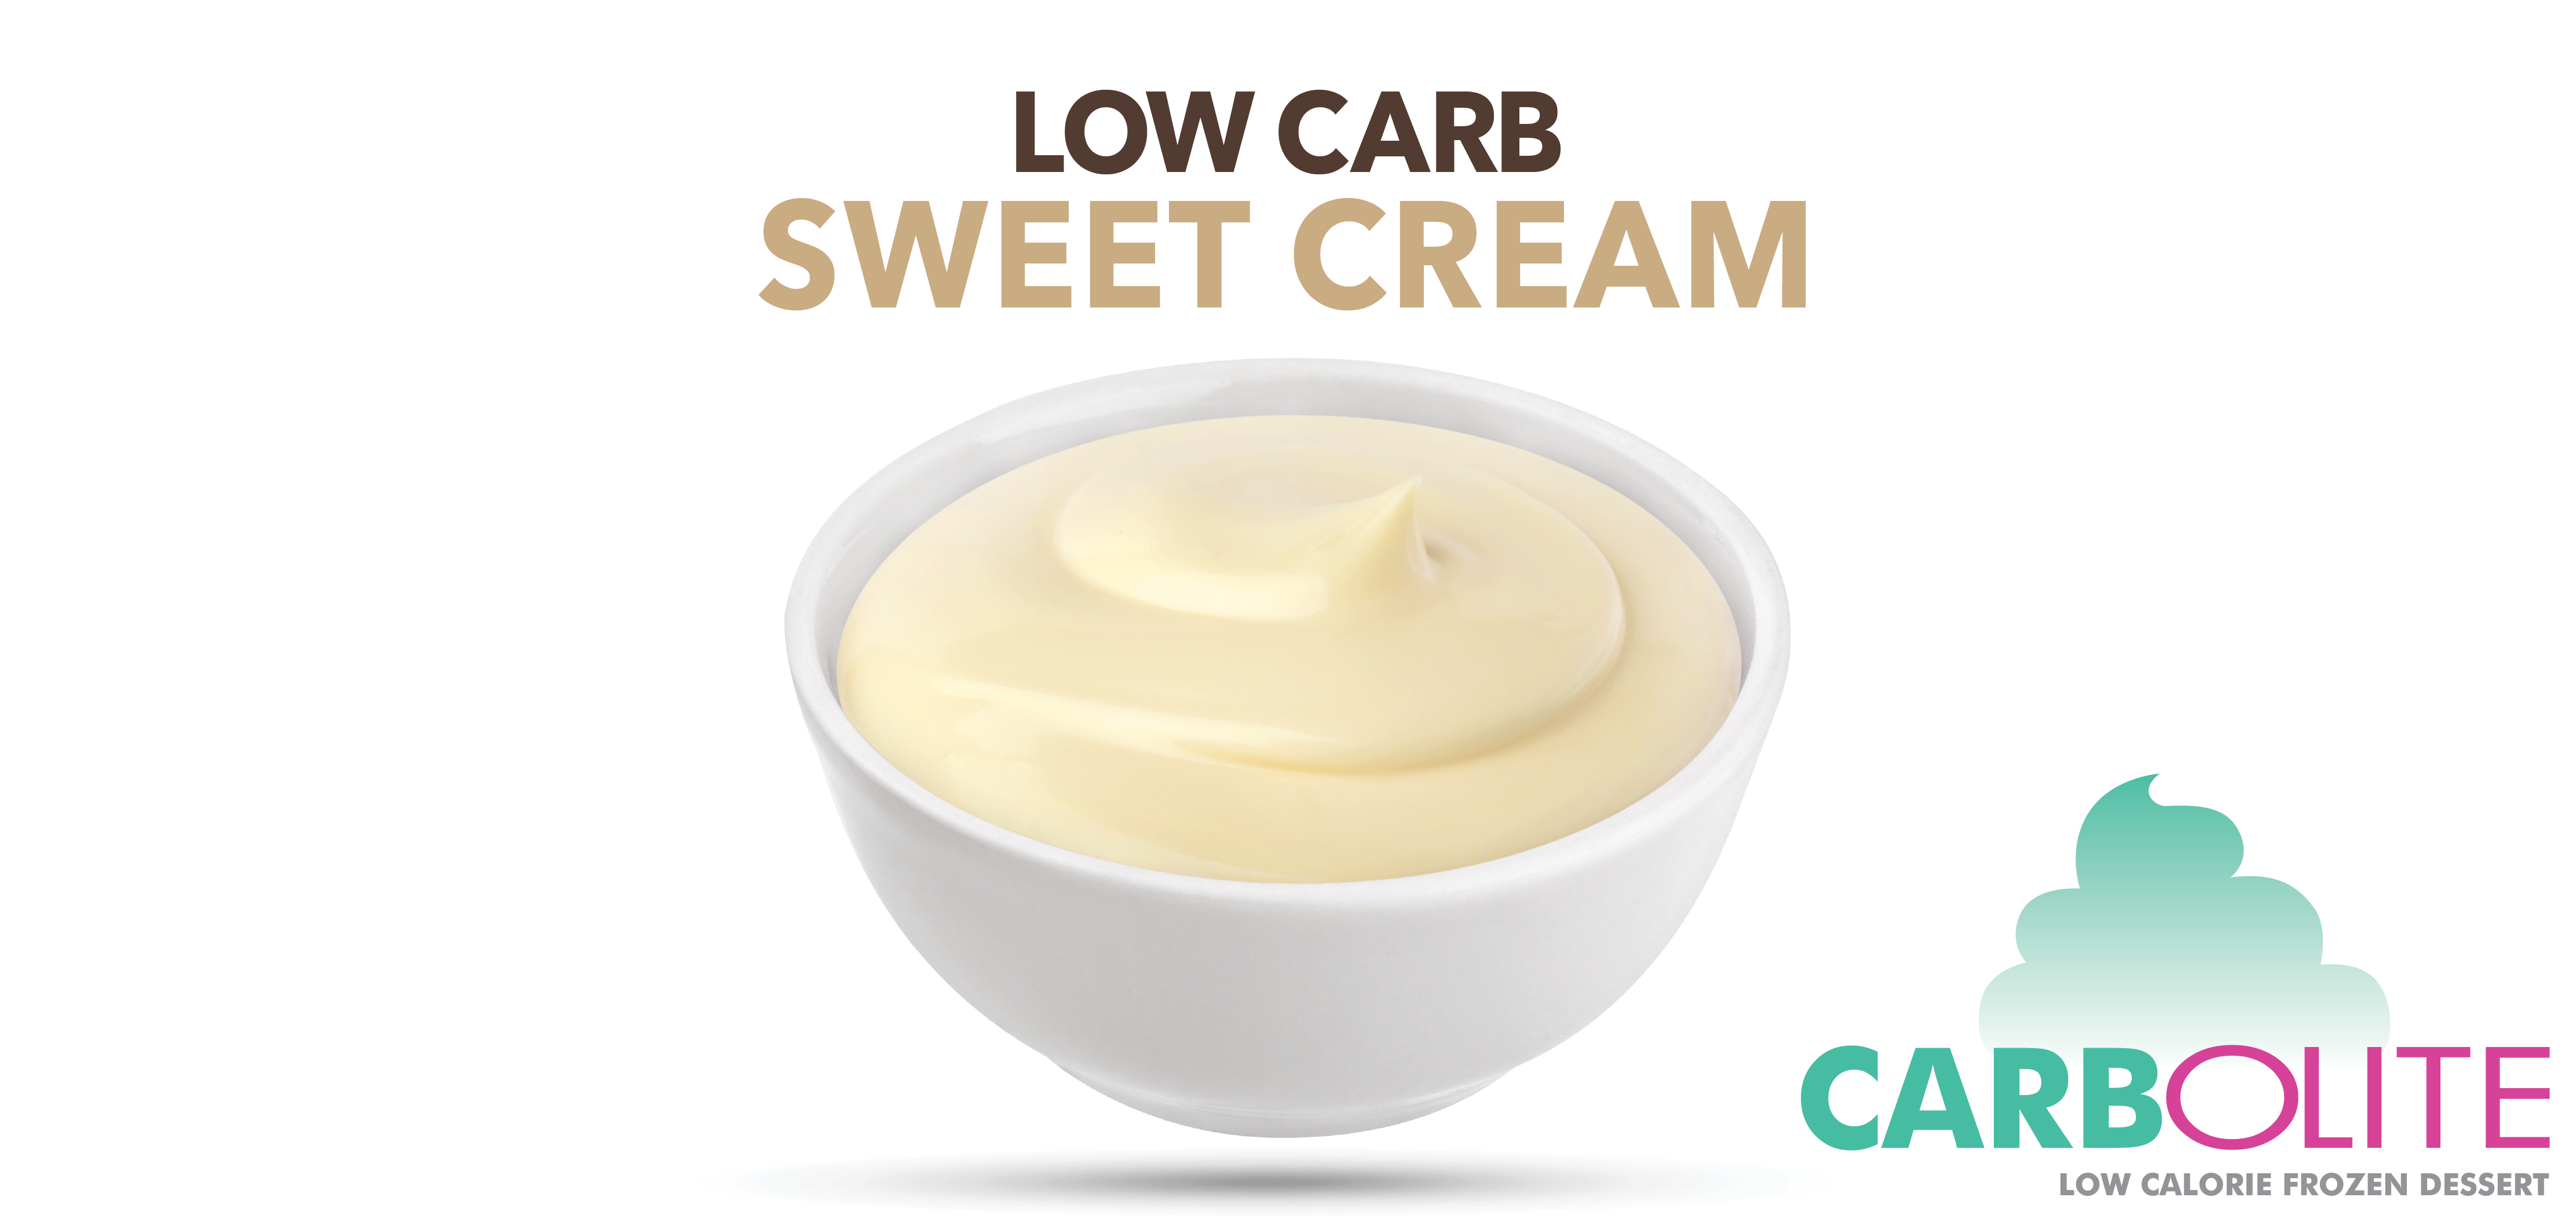 carbolite low carb no sugar added sweet cream label image